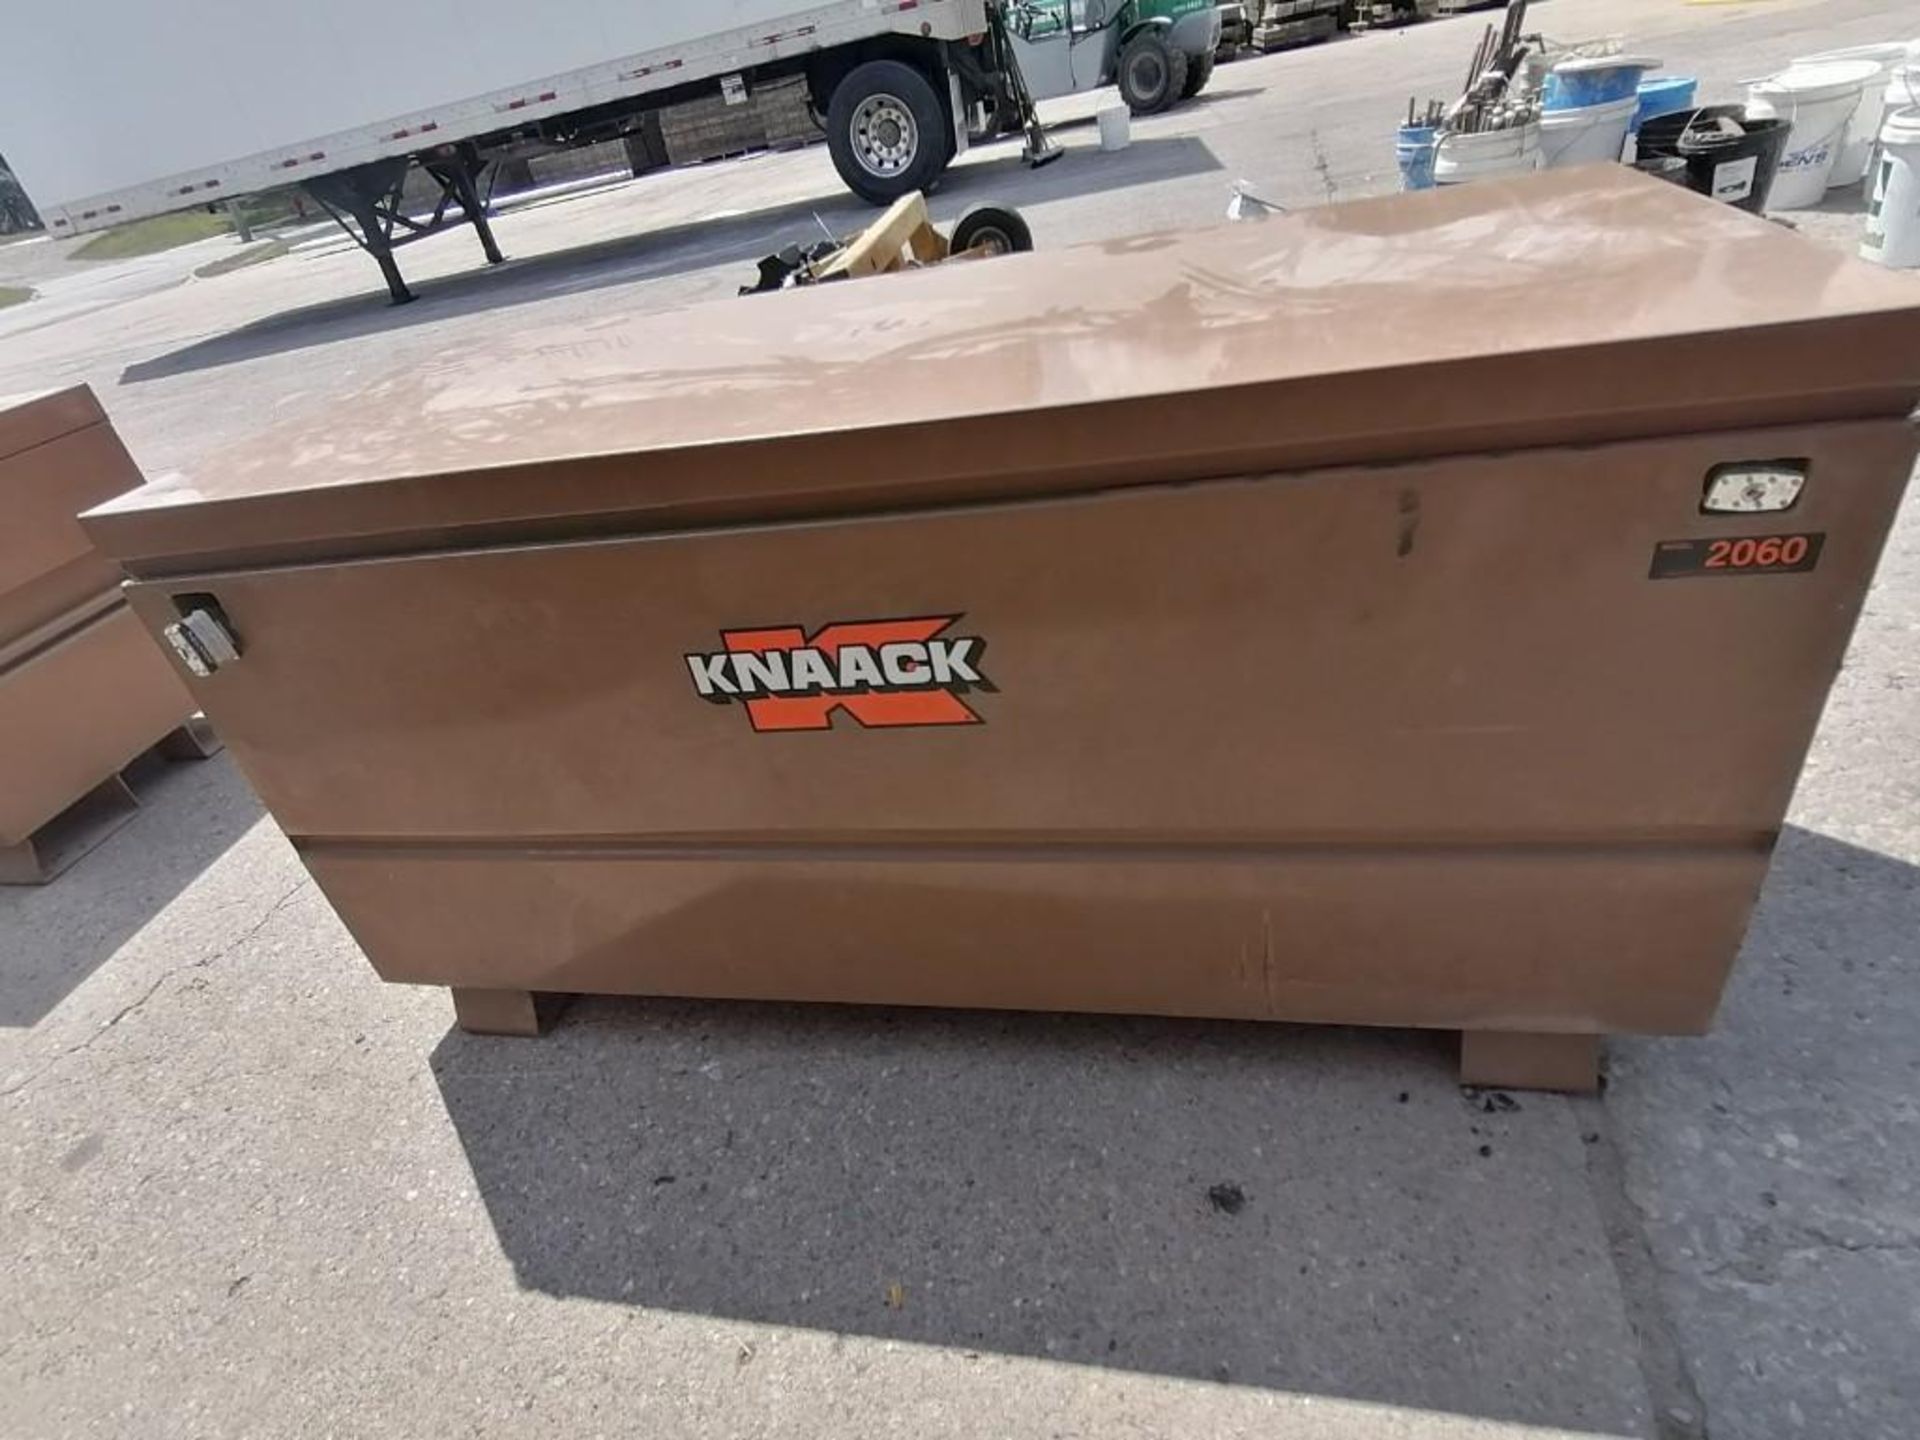 KNAACK Tool Box Model 2060. Located at 301 E Henry Street, Mt. Pleasant, IA 52641.